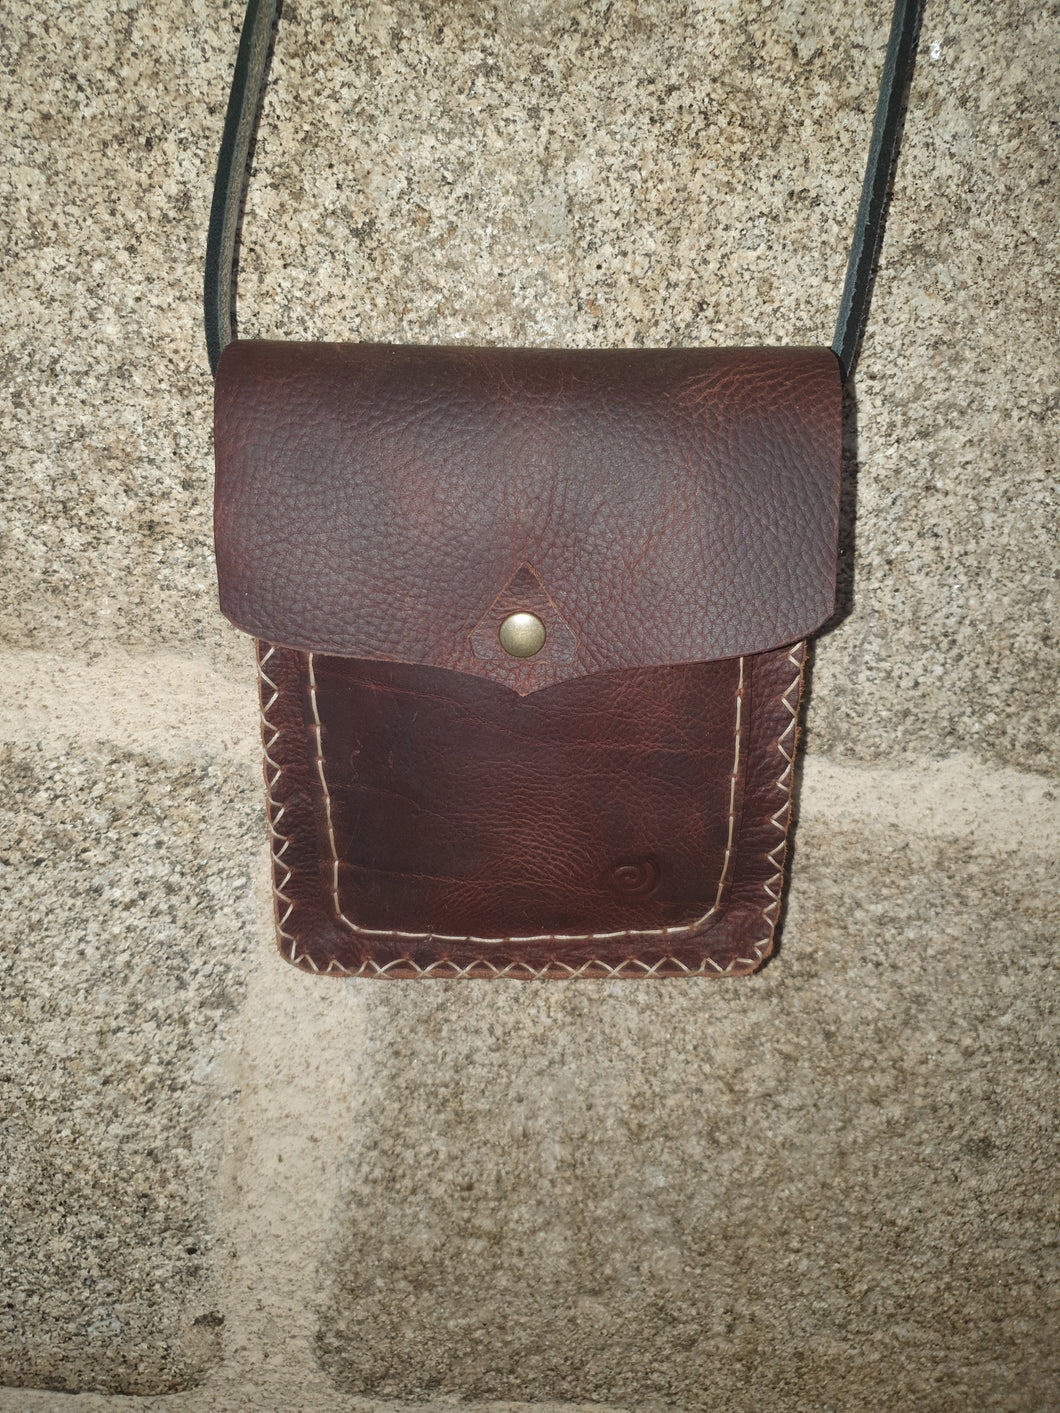 Petit sac artisanal rectangle en cuir marron pull-up